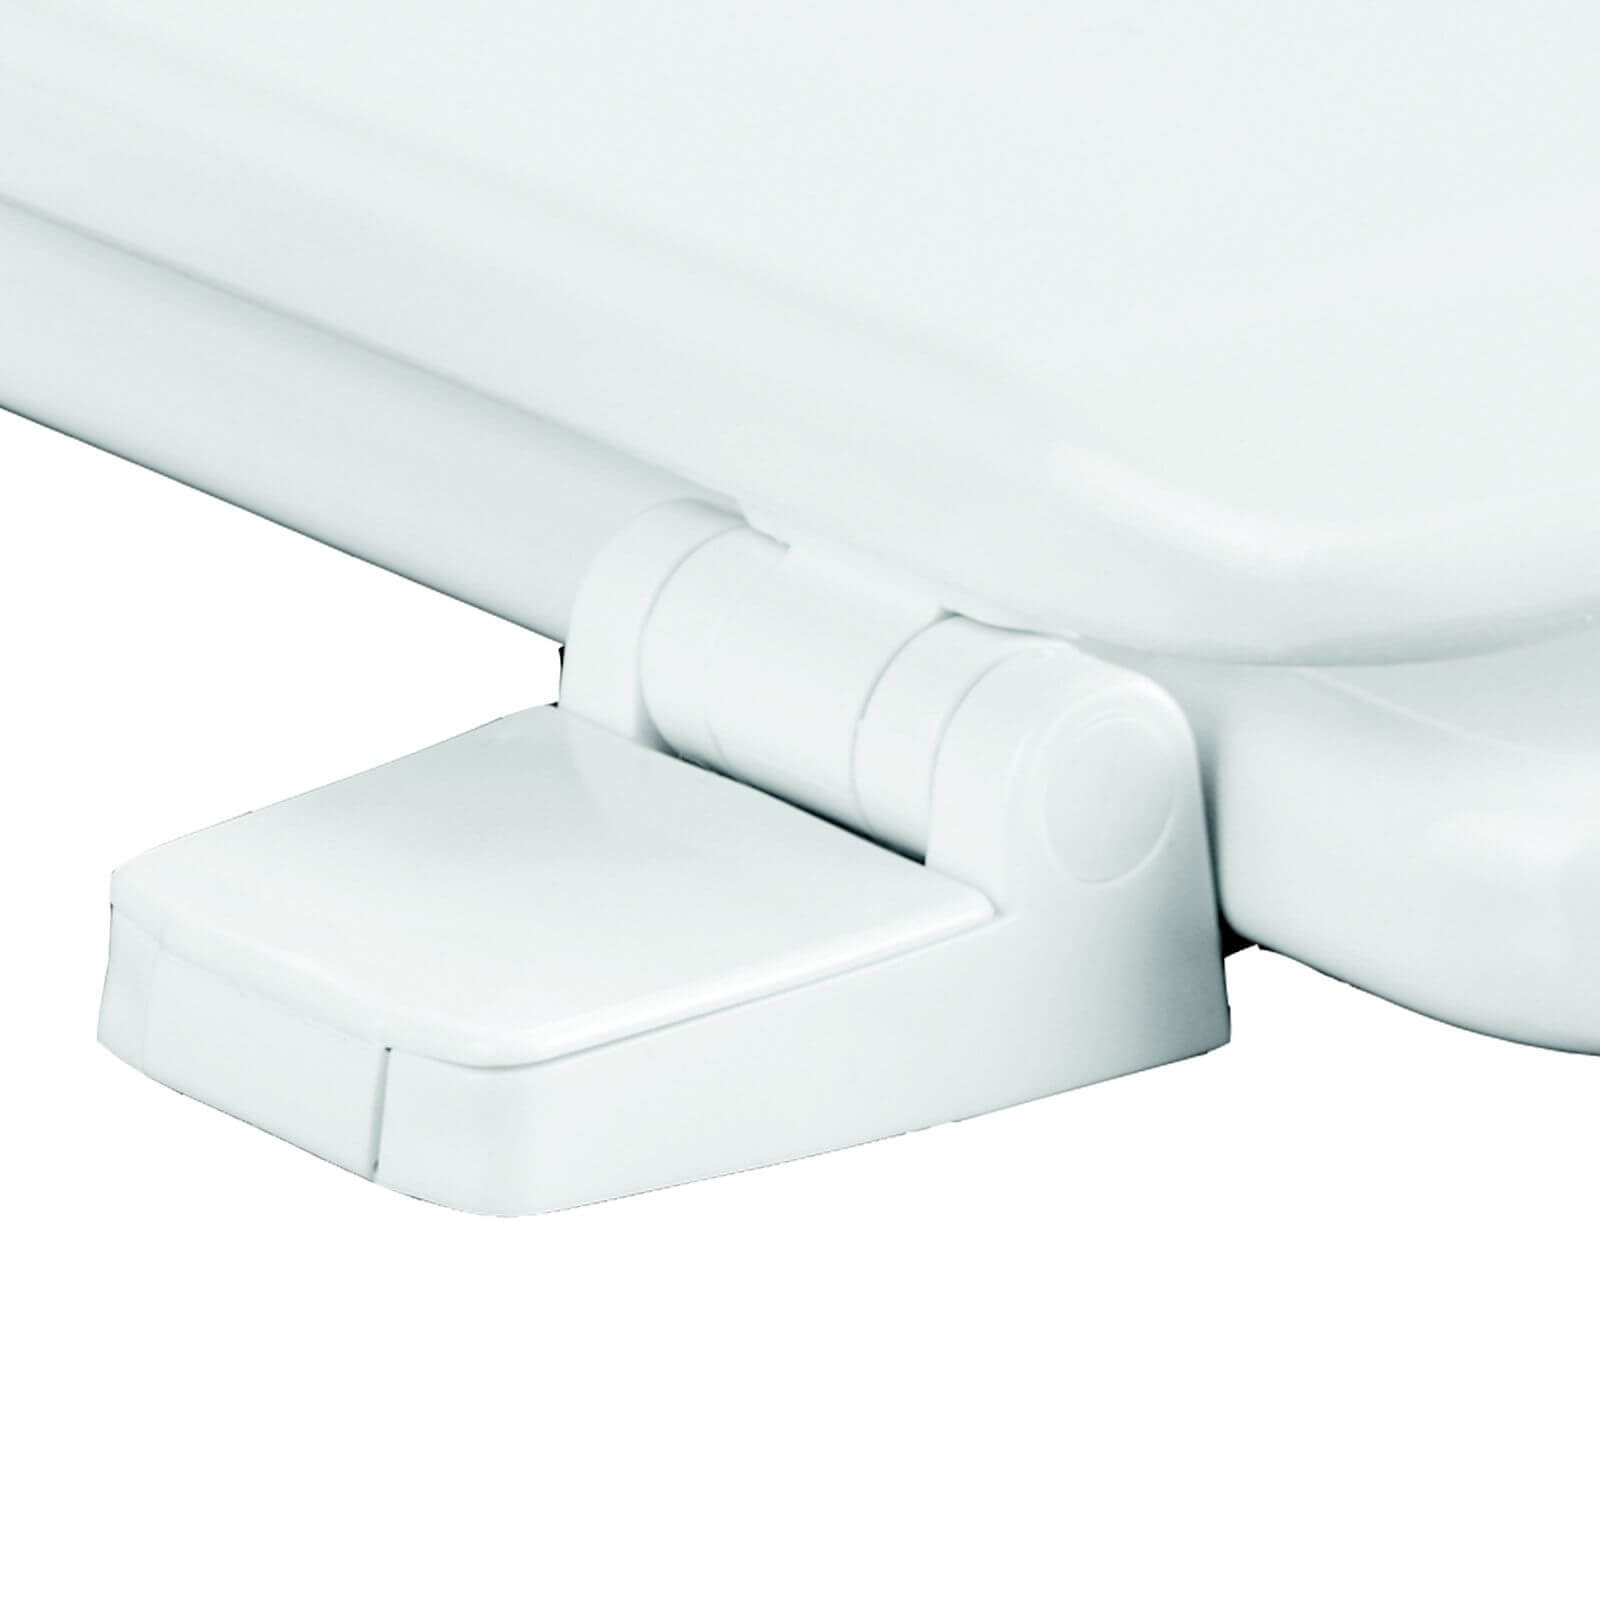 Bemis Stockton Ultra-Fix Top Fix Toilet Seat - White